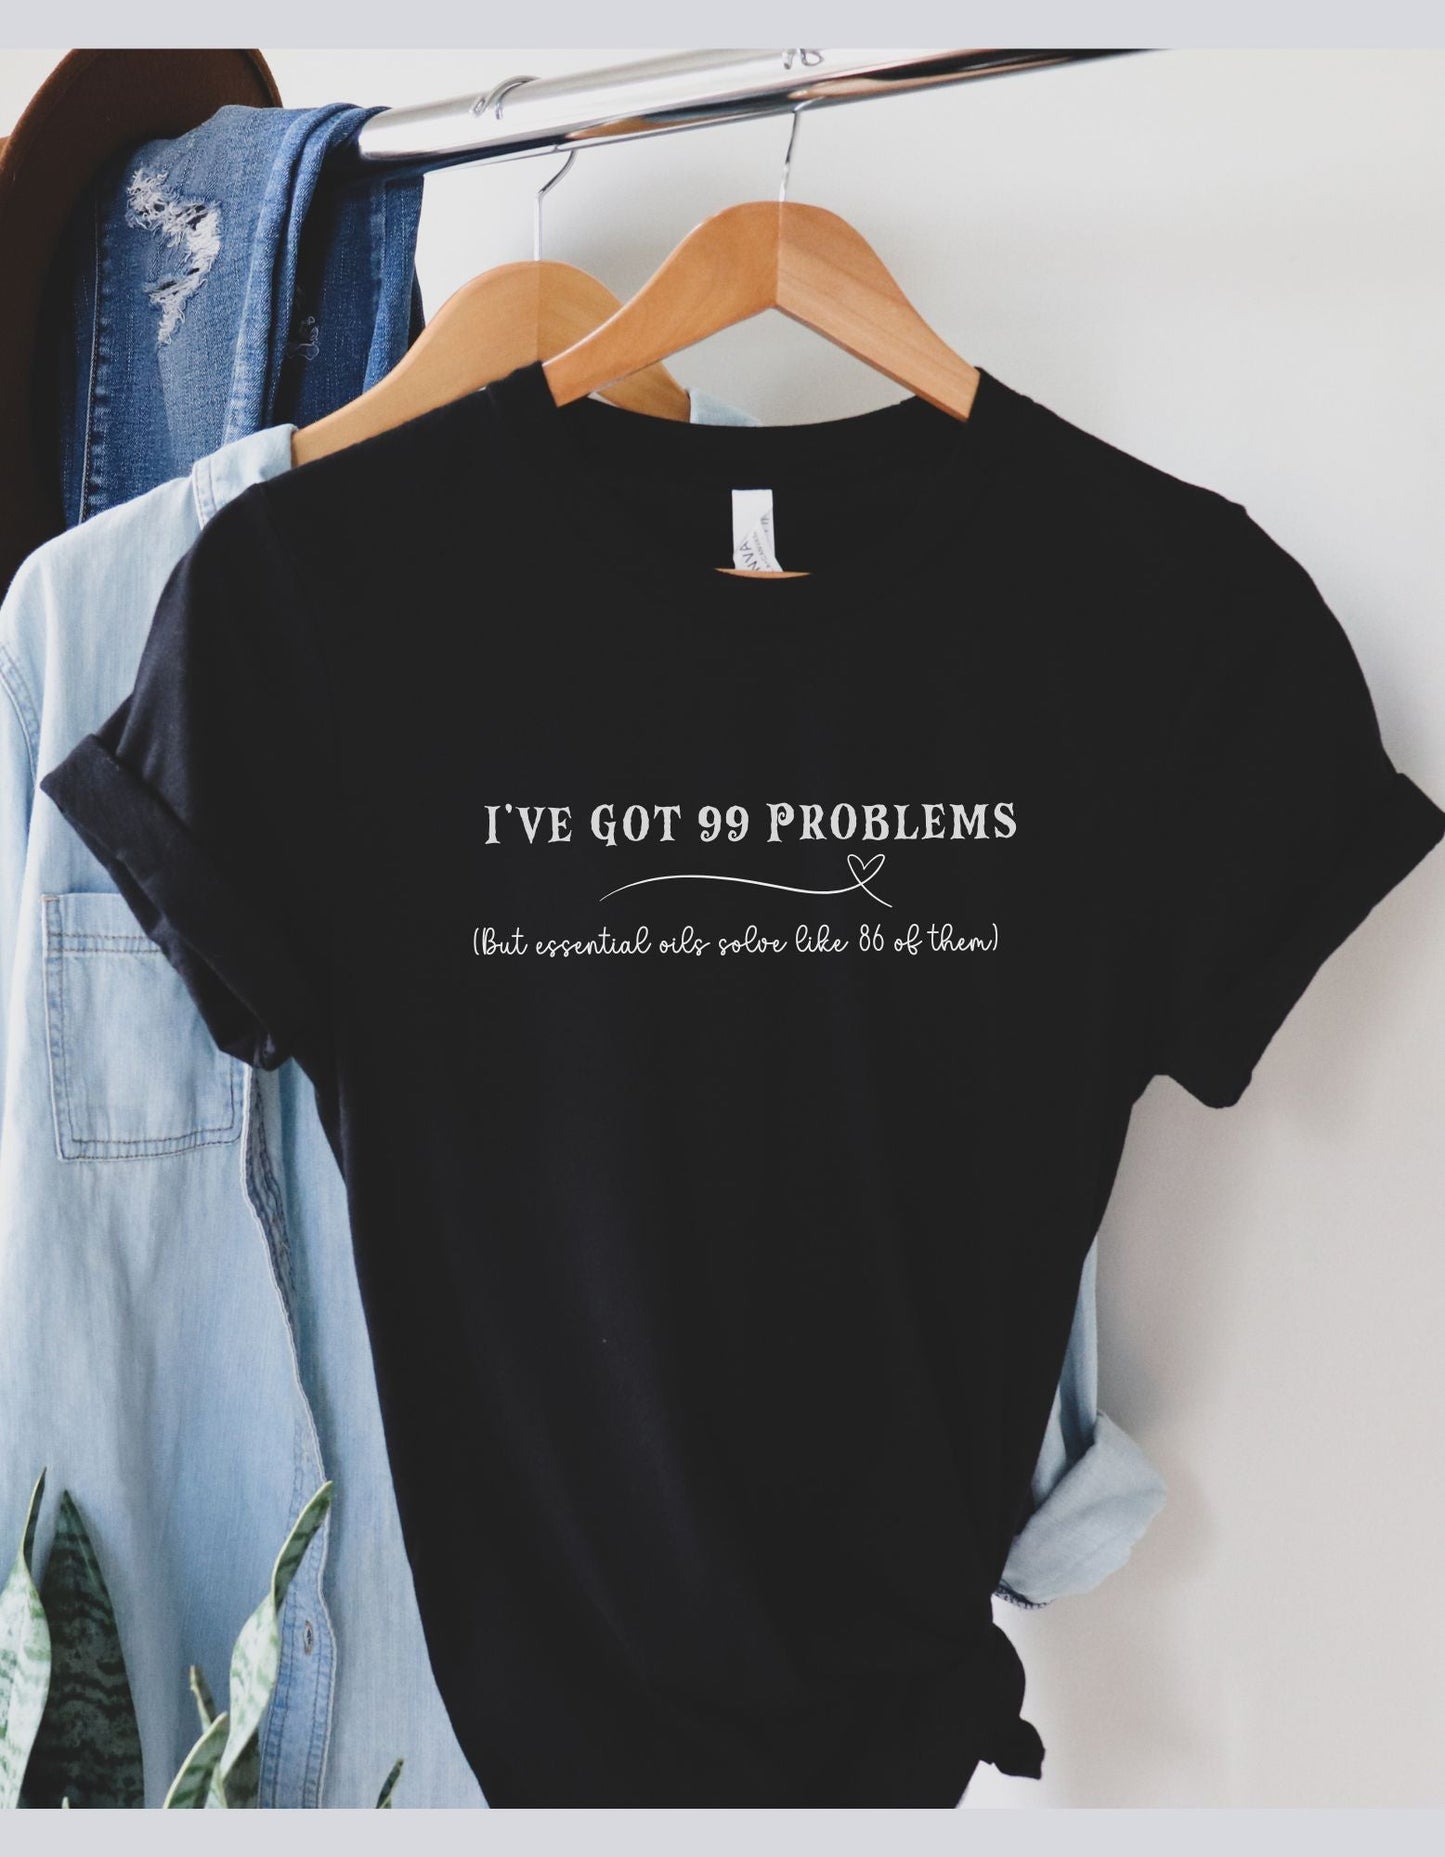 Essential Oil Lover T-shirt - Got 99 Problems? Sure, but essential oils solve 86 of them.